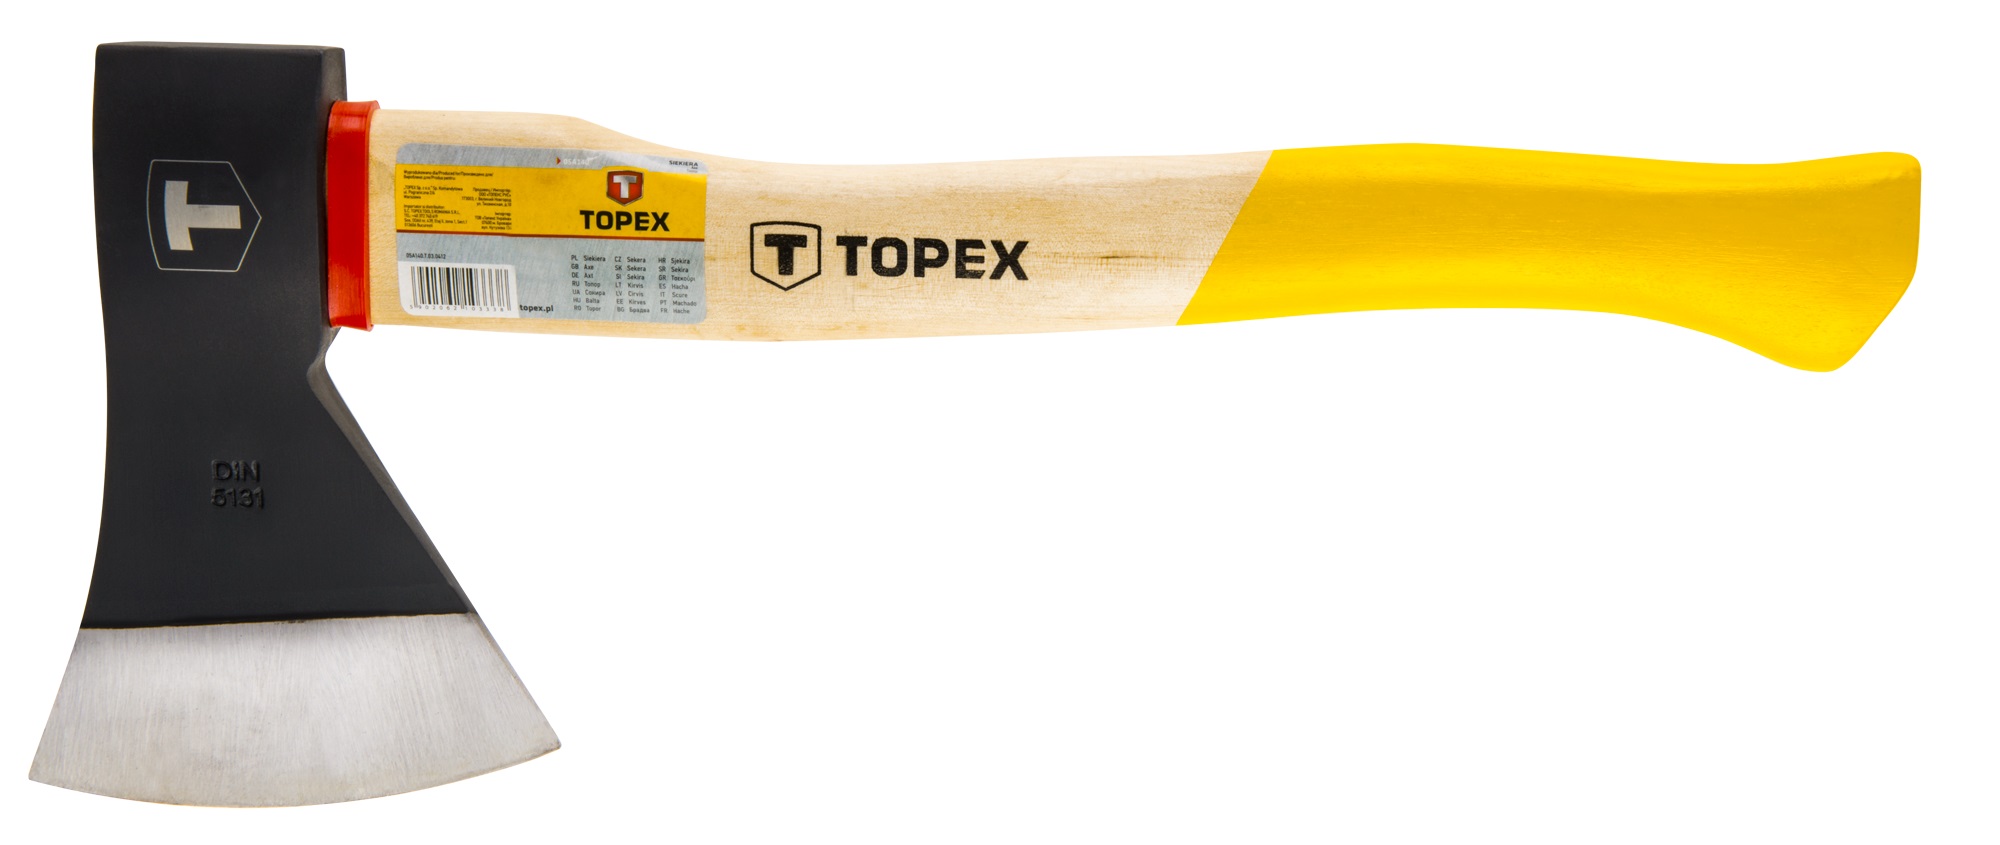 Топор Topex 05A136 цена 375.00 грн - фотография 2